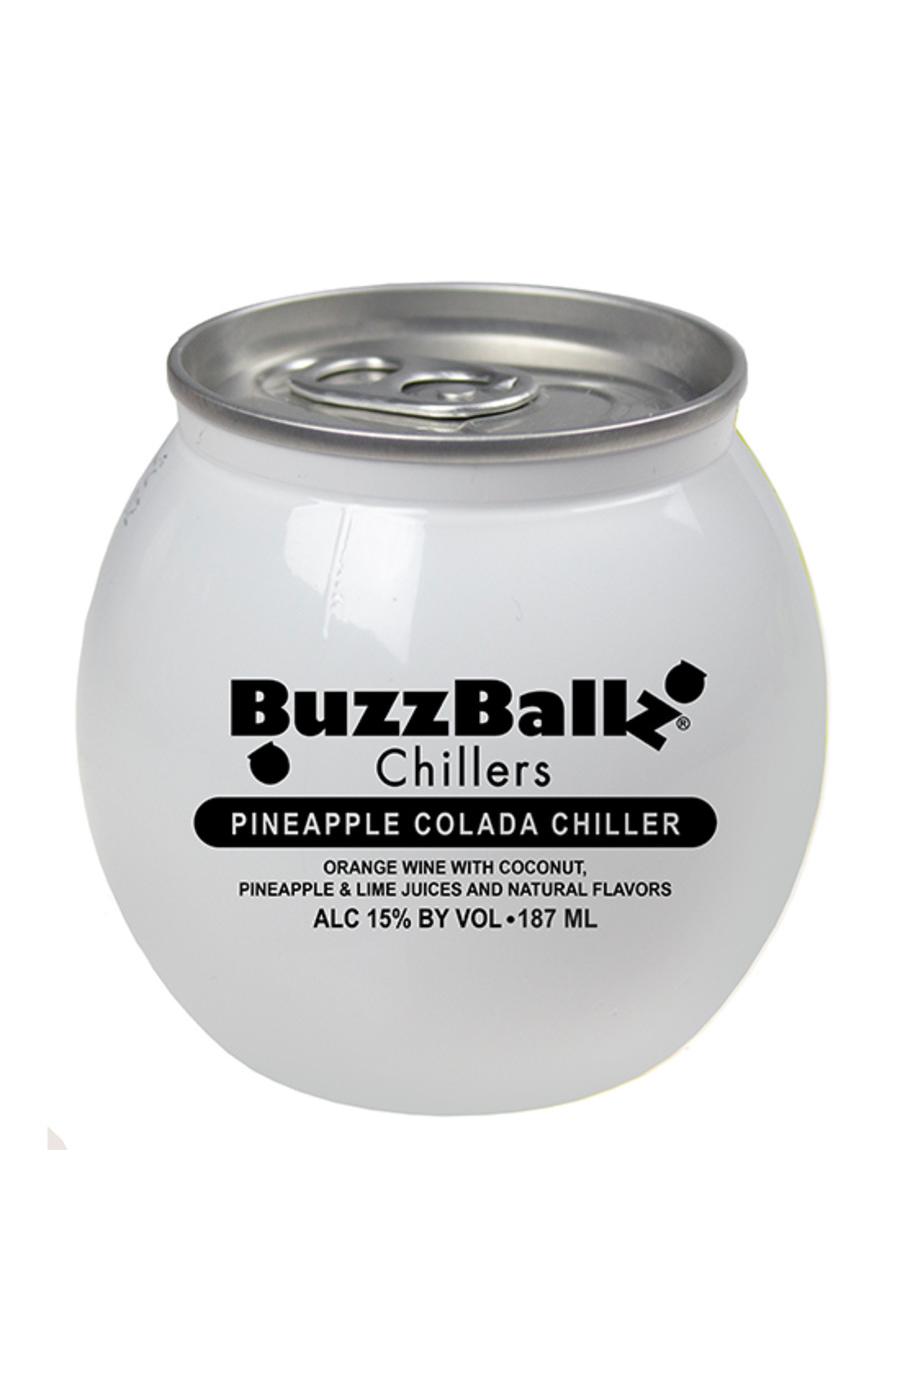 Buzzballz Pineapple Colada Chiller; image 1 of 2